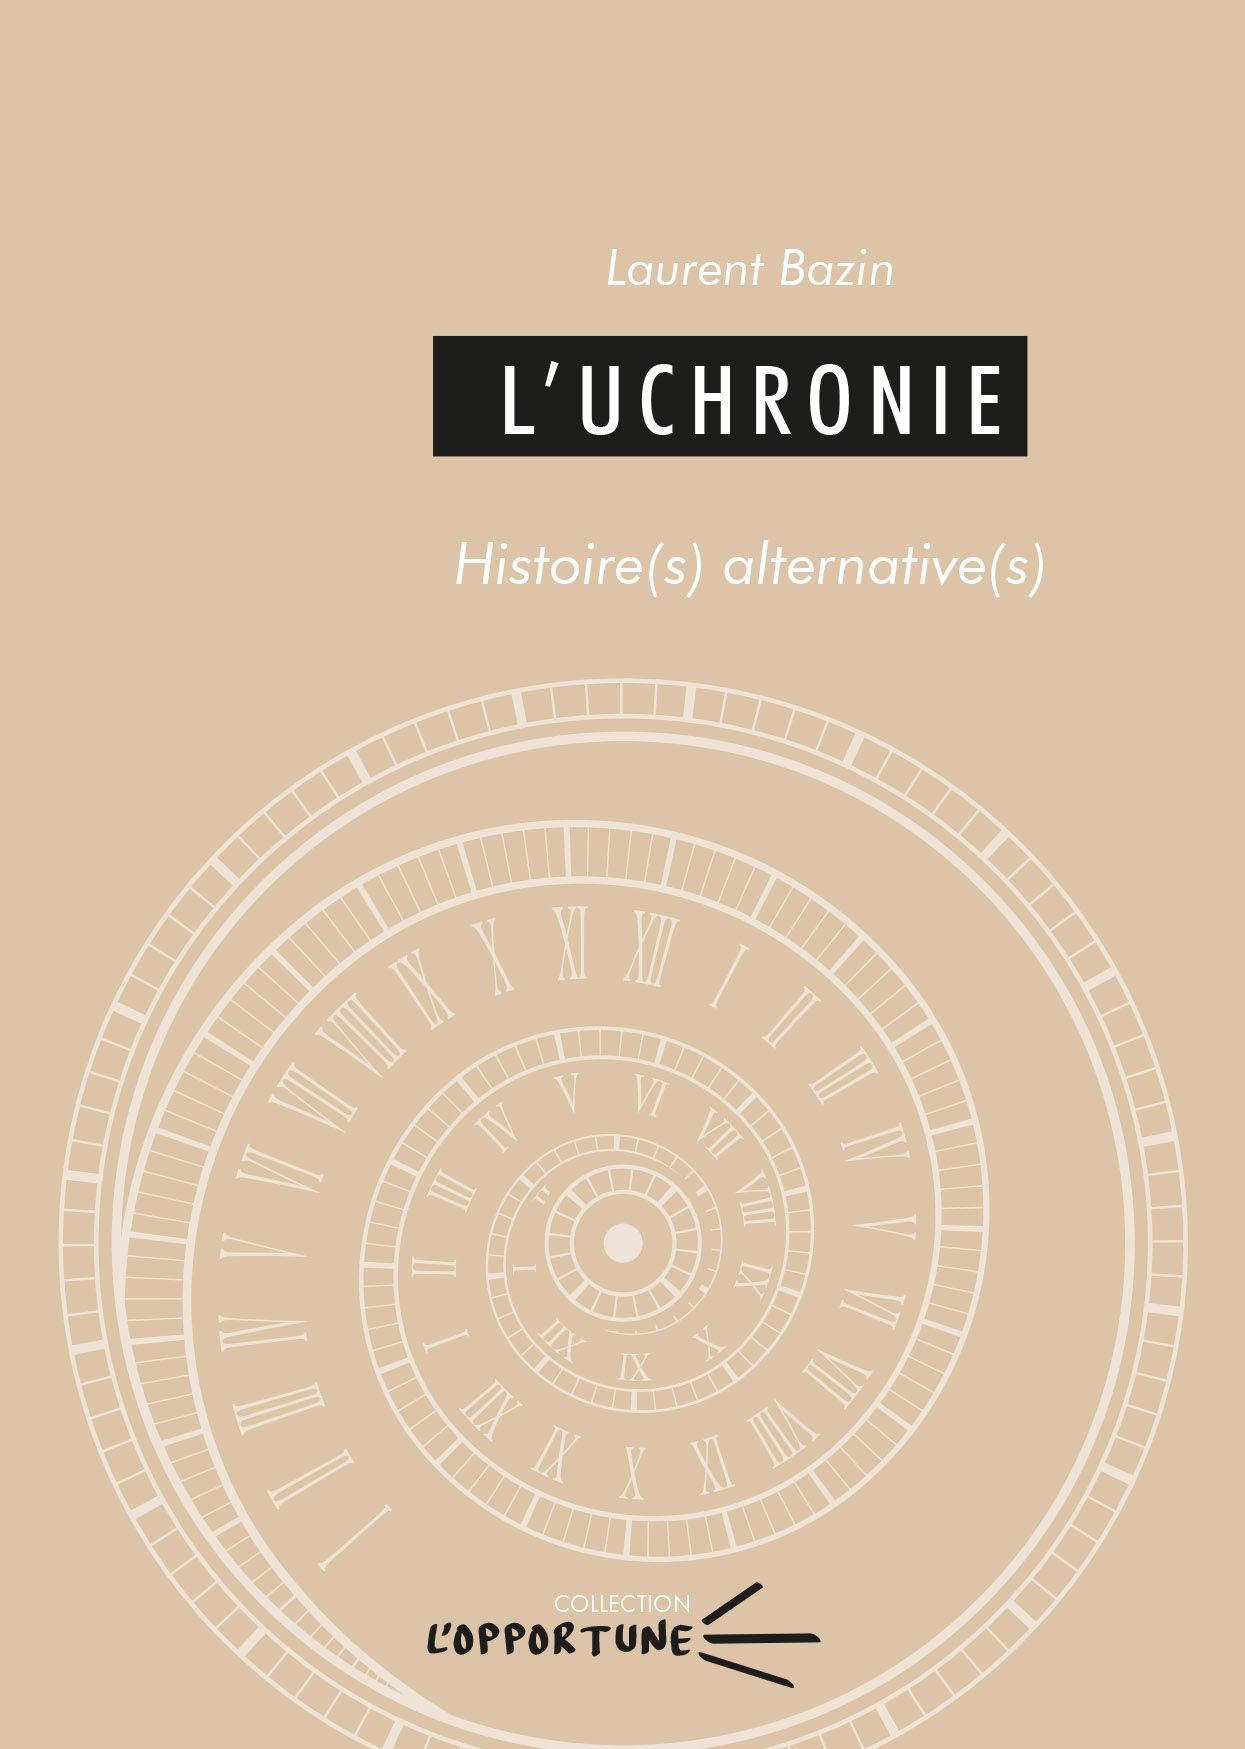 Laurent Bazin, L'uchronie. Histoire(s) alternative(s)